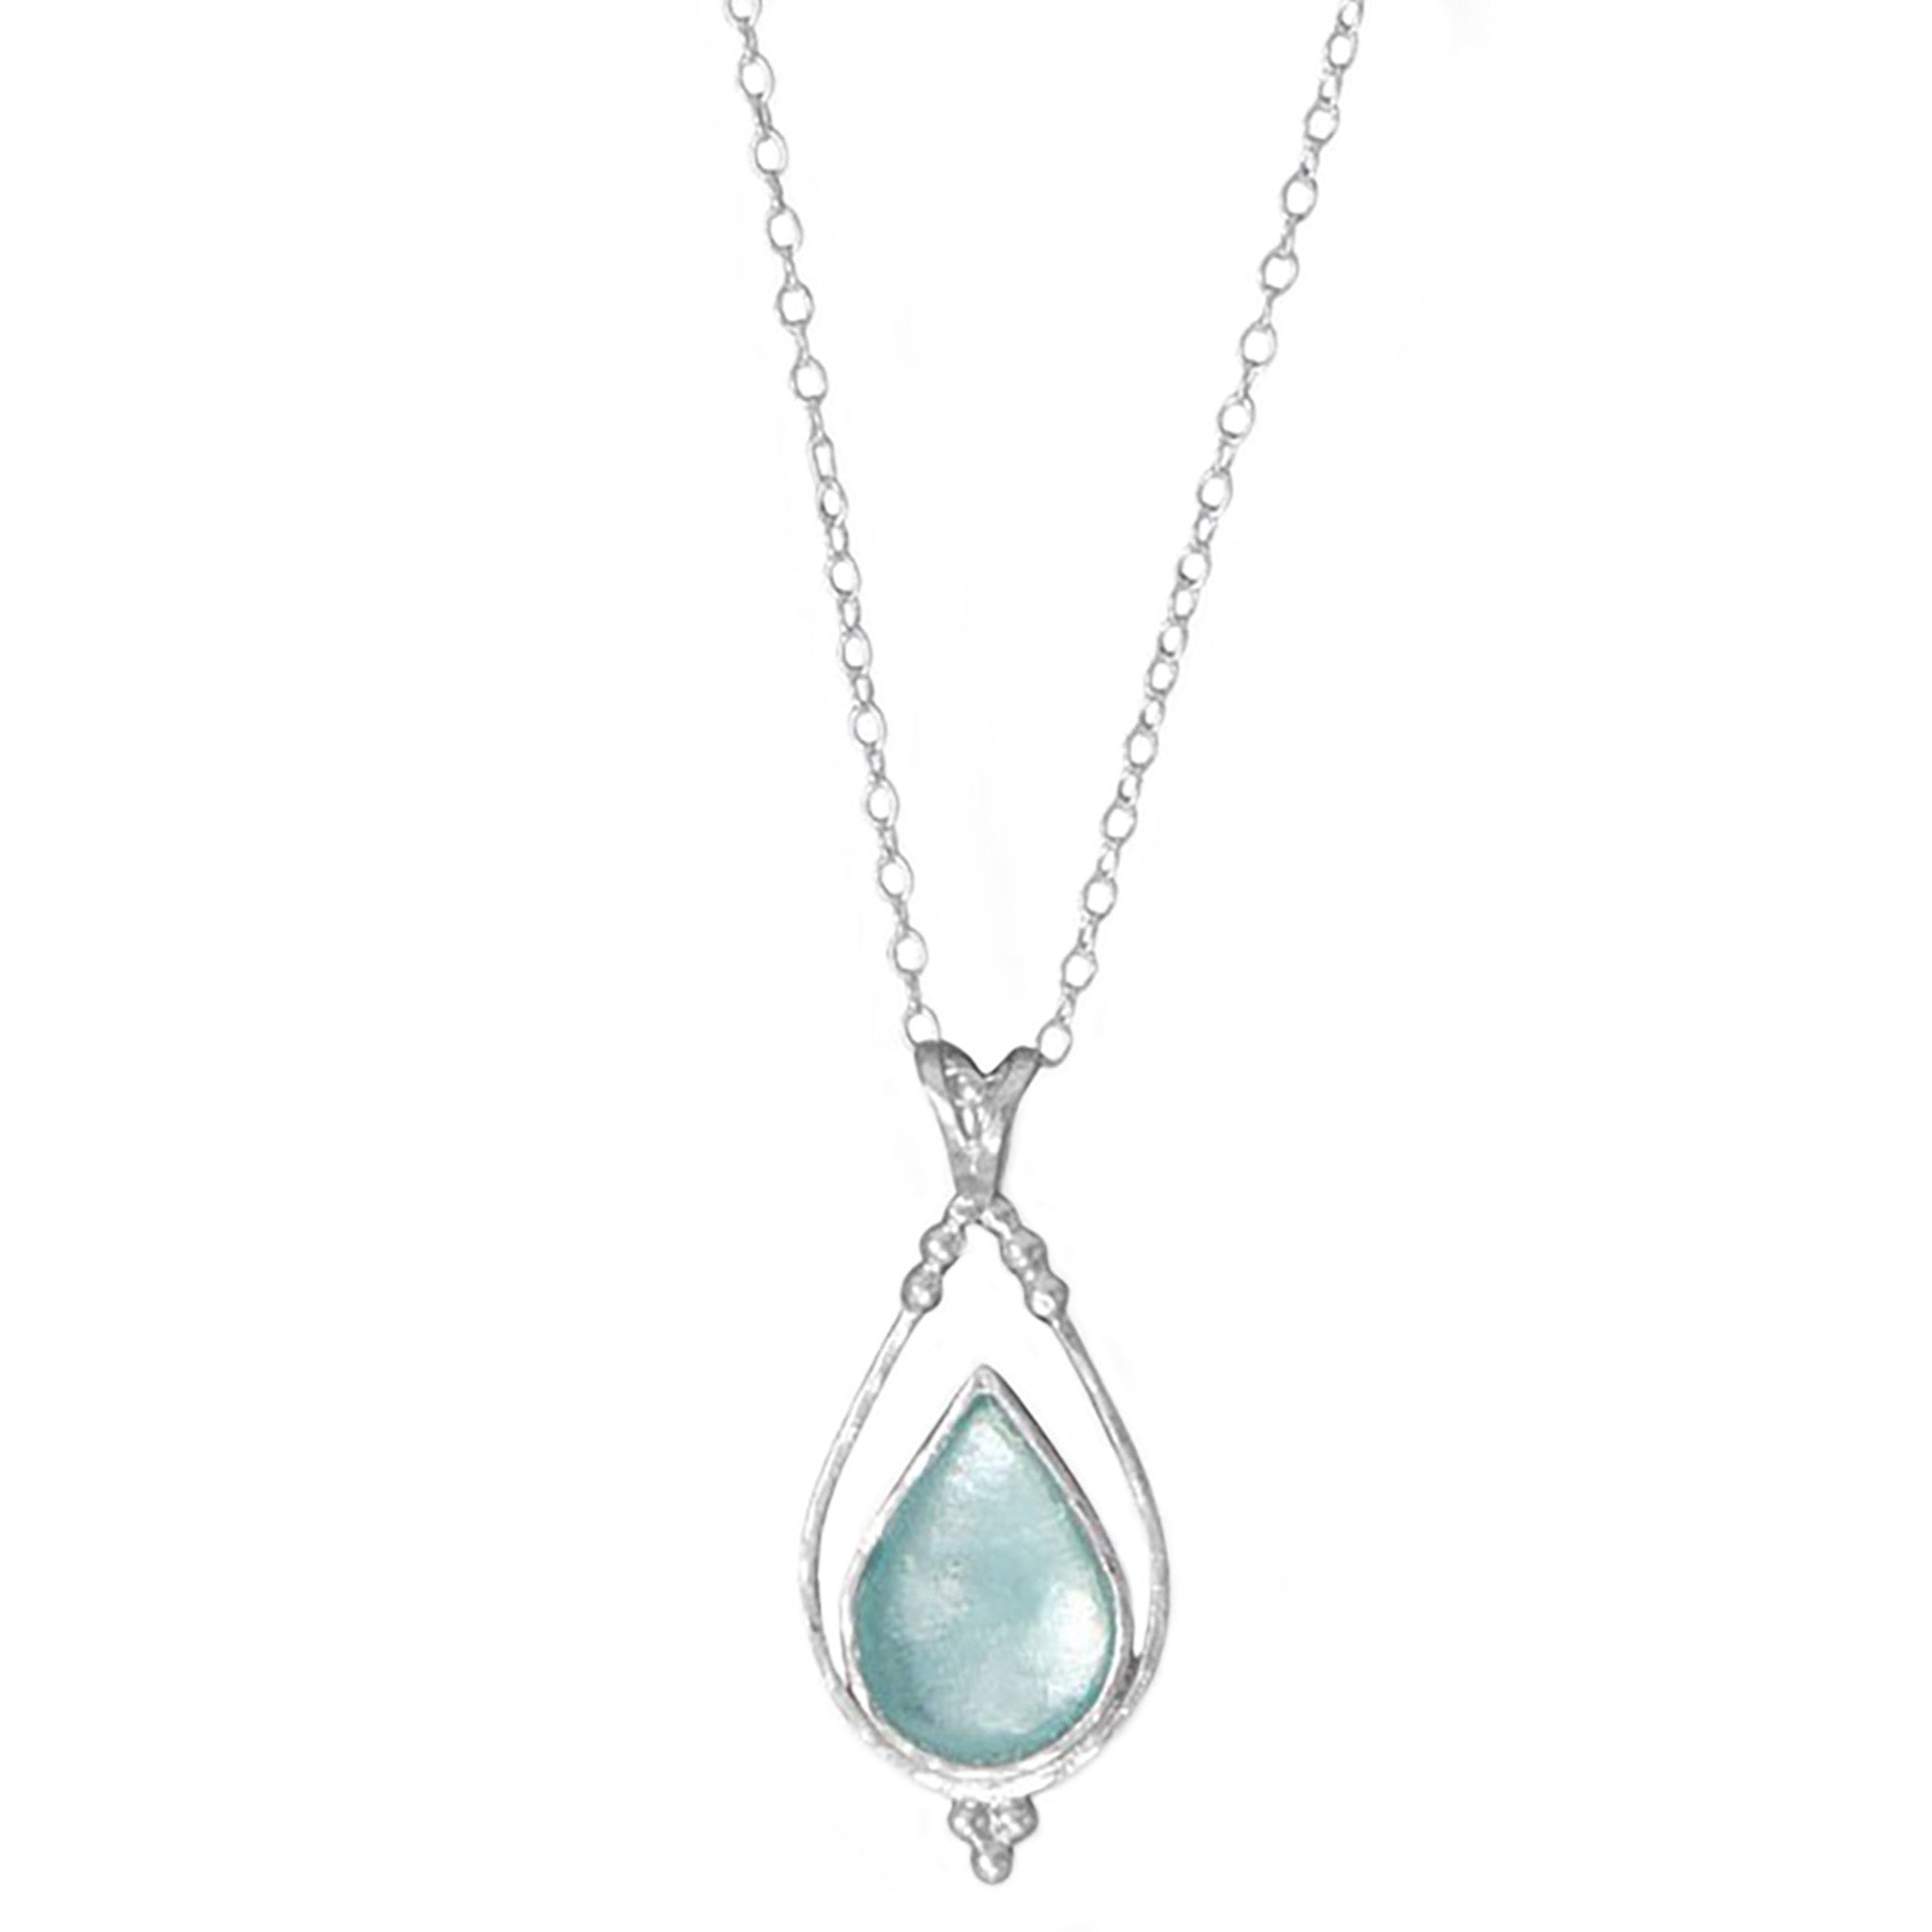 Aqua Roman Glass Pendant Necklace